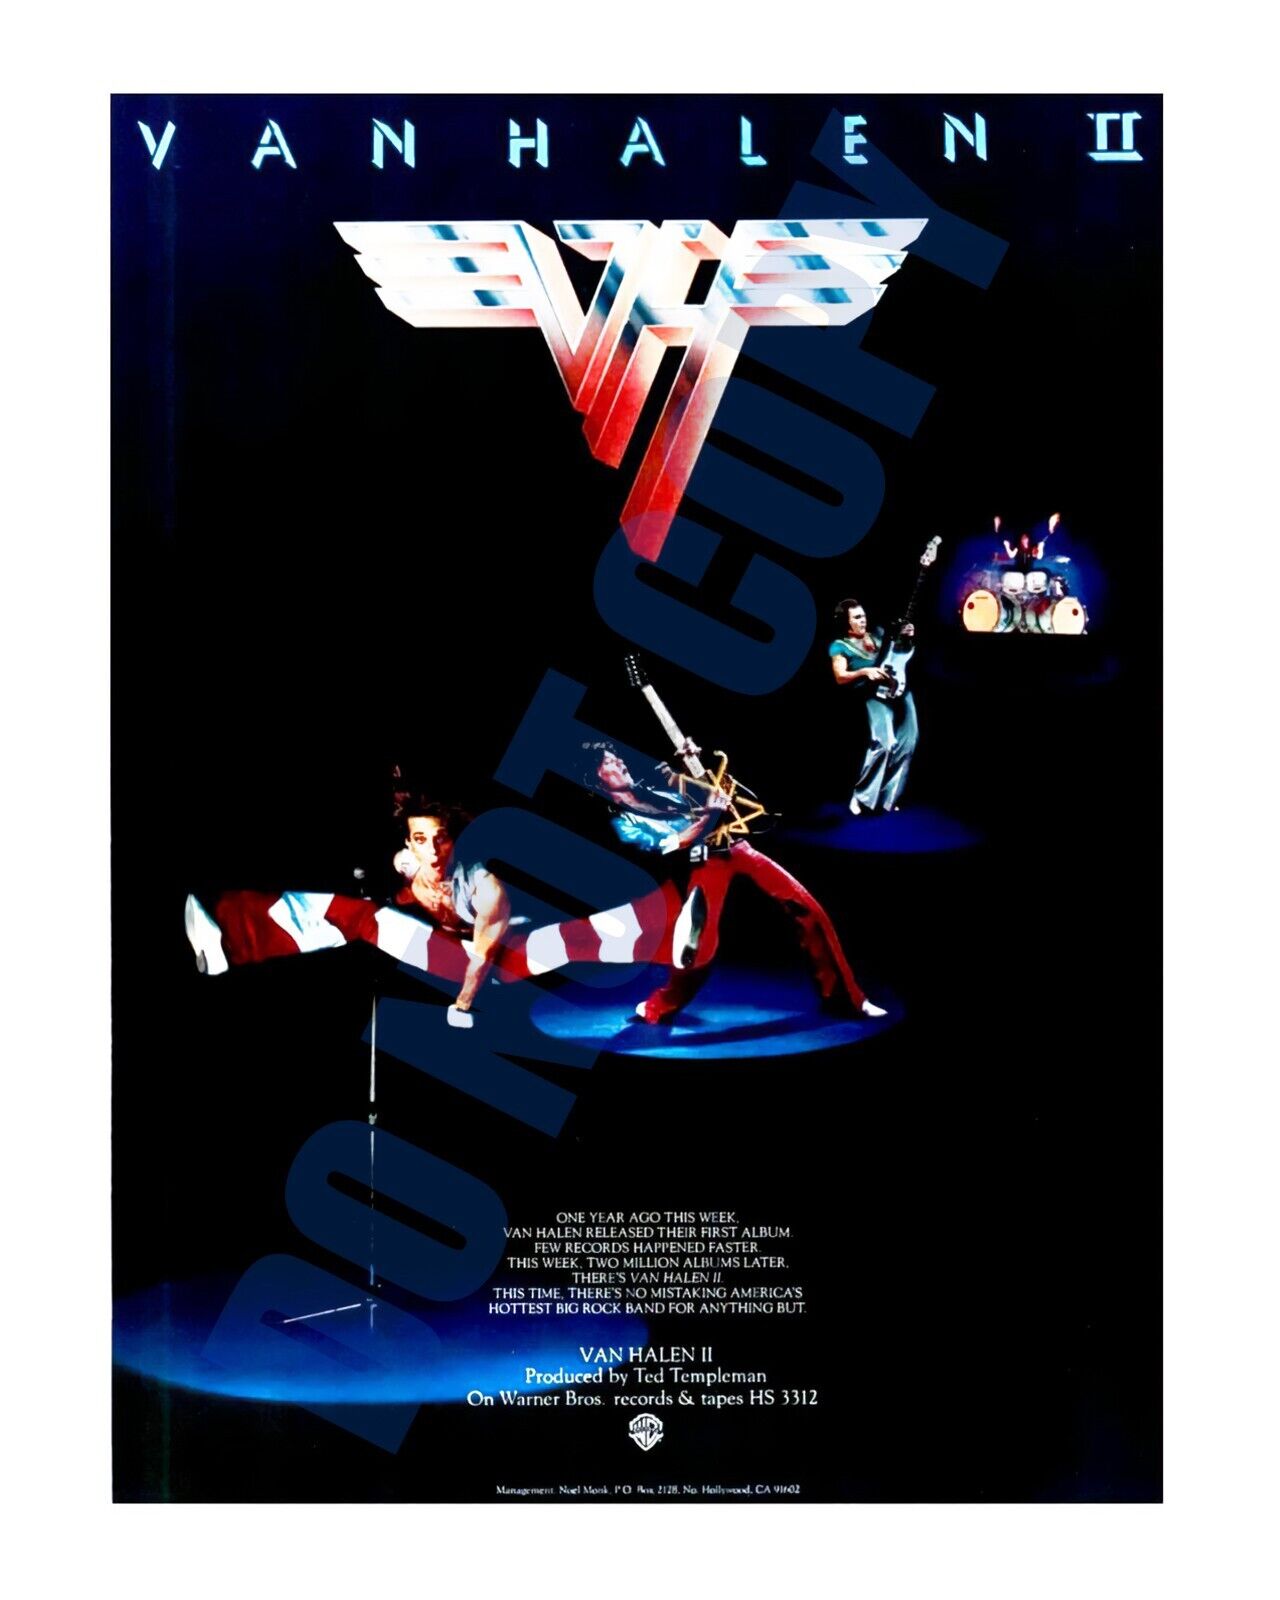 1979 Van Halen 2 Record Announcement Magazine Announcement Ad 8x10 Photo